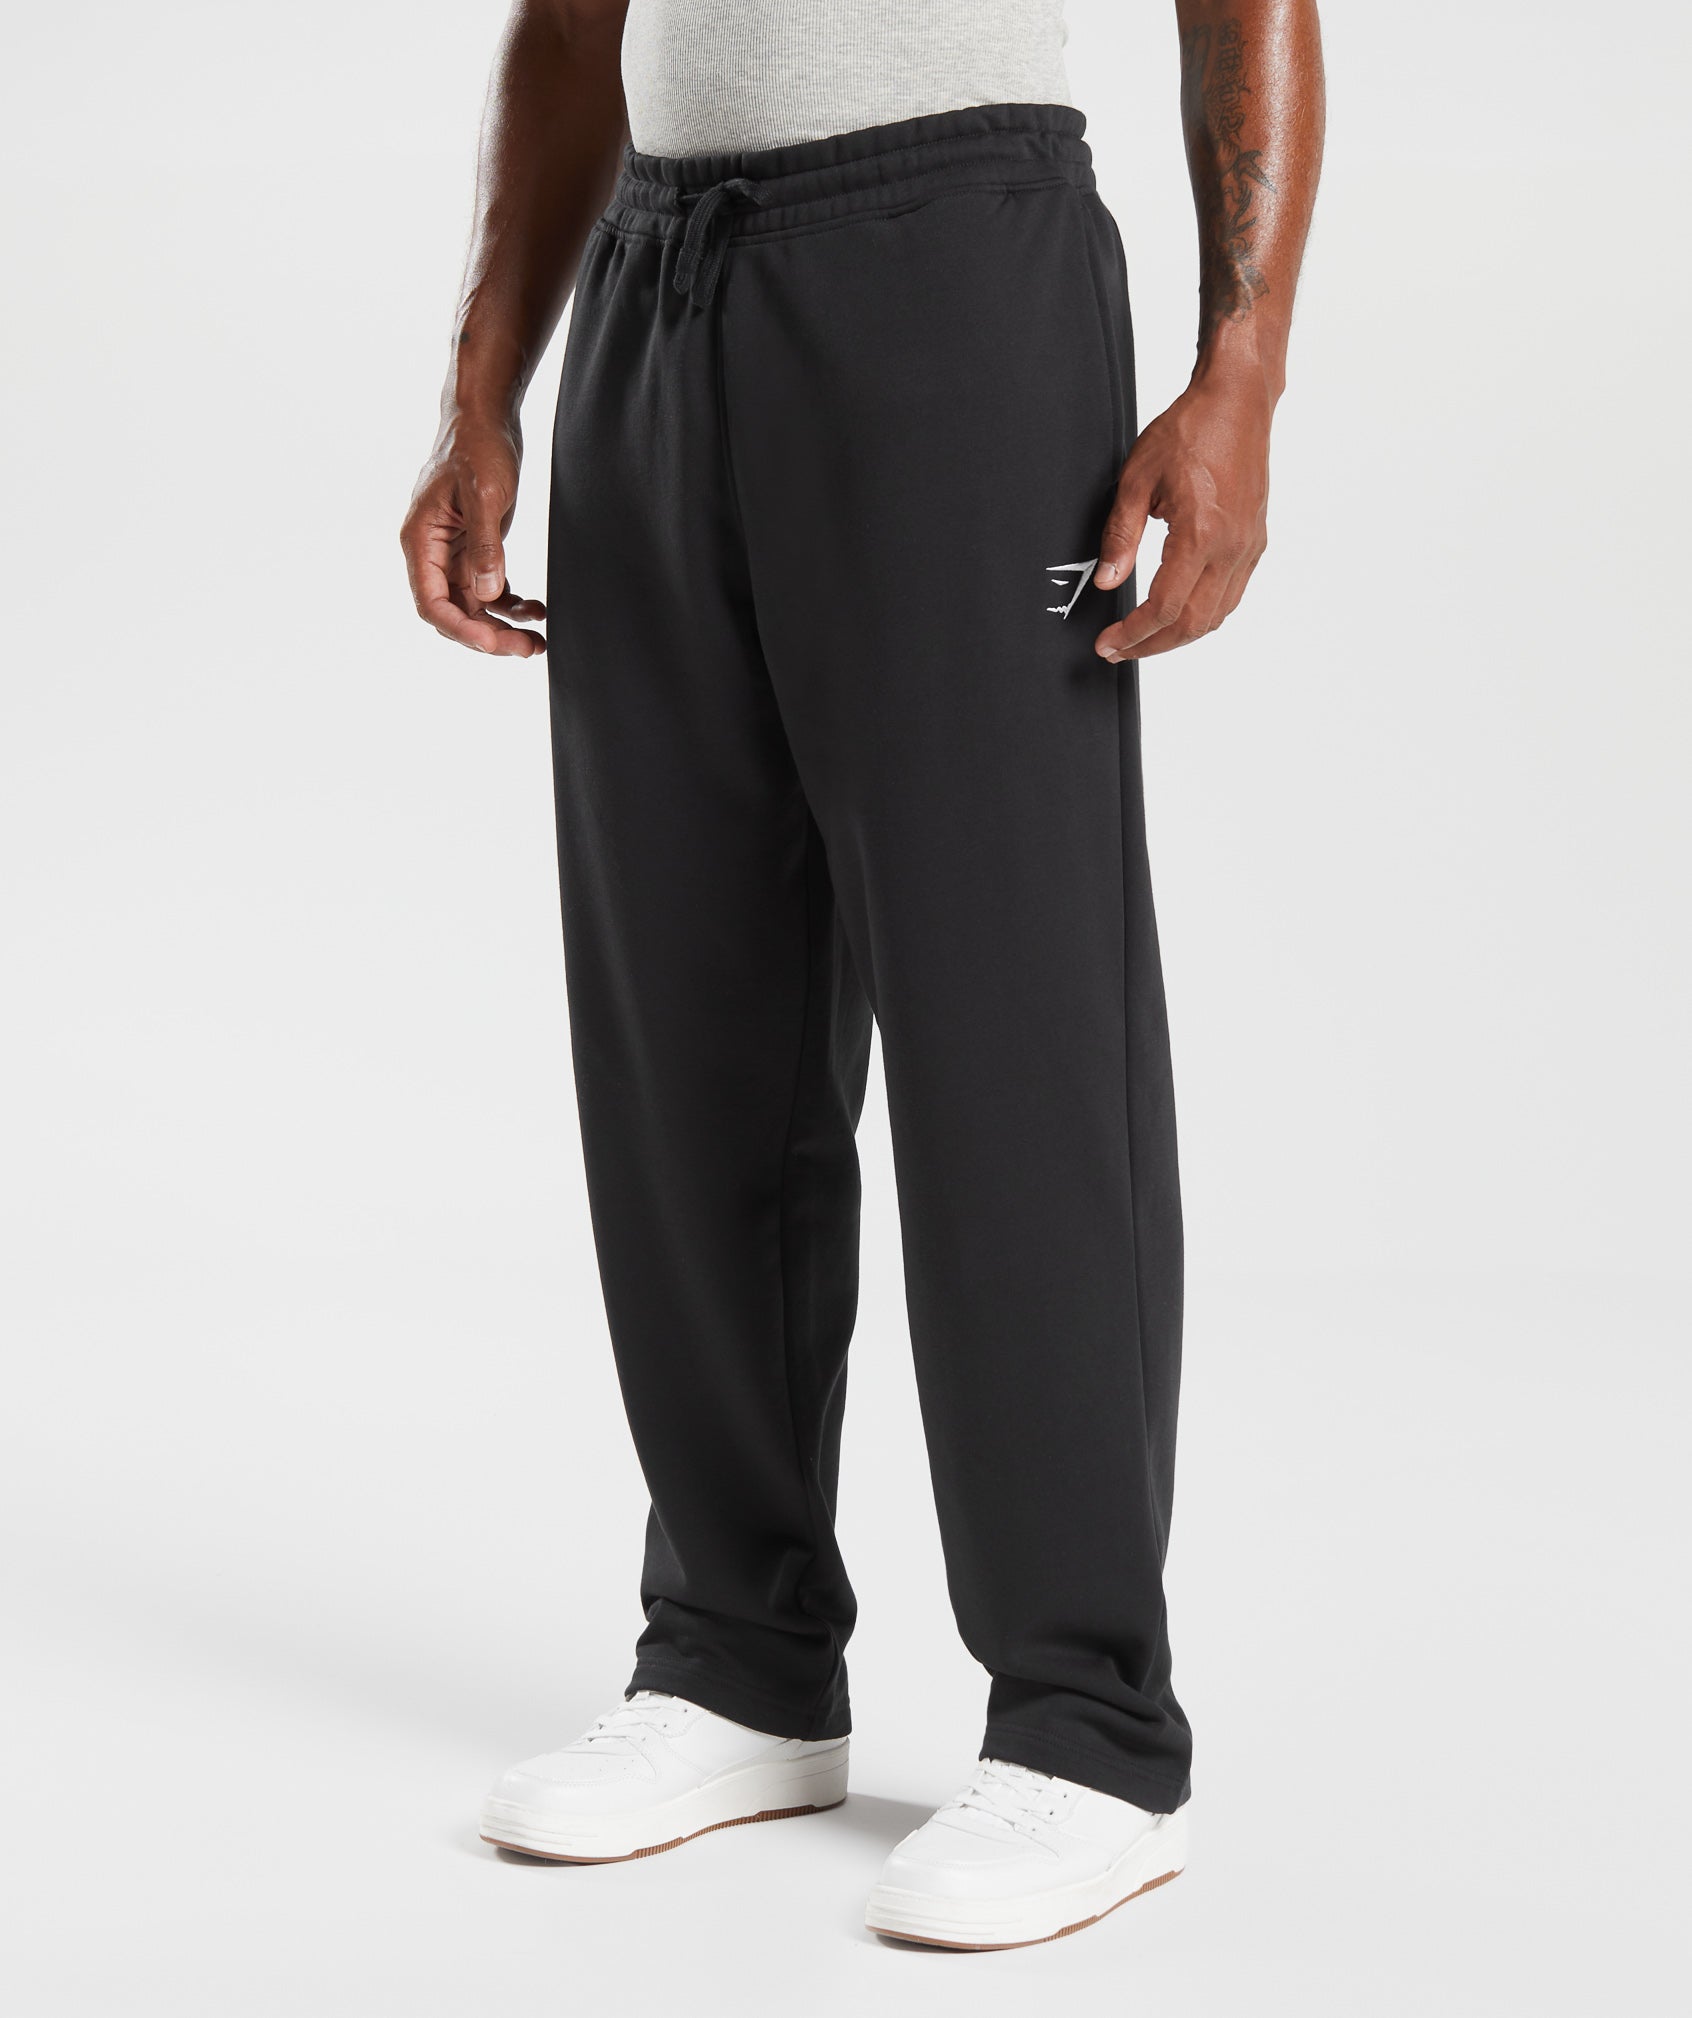 JMR USA INC Men's Fleece Pants with Pockets Cuffed Bottom Track Pants  Joggers for Men, Heather Gray 3XL